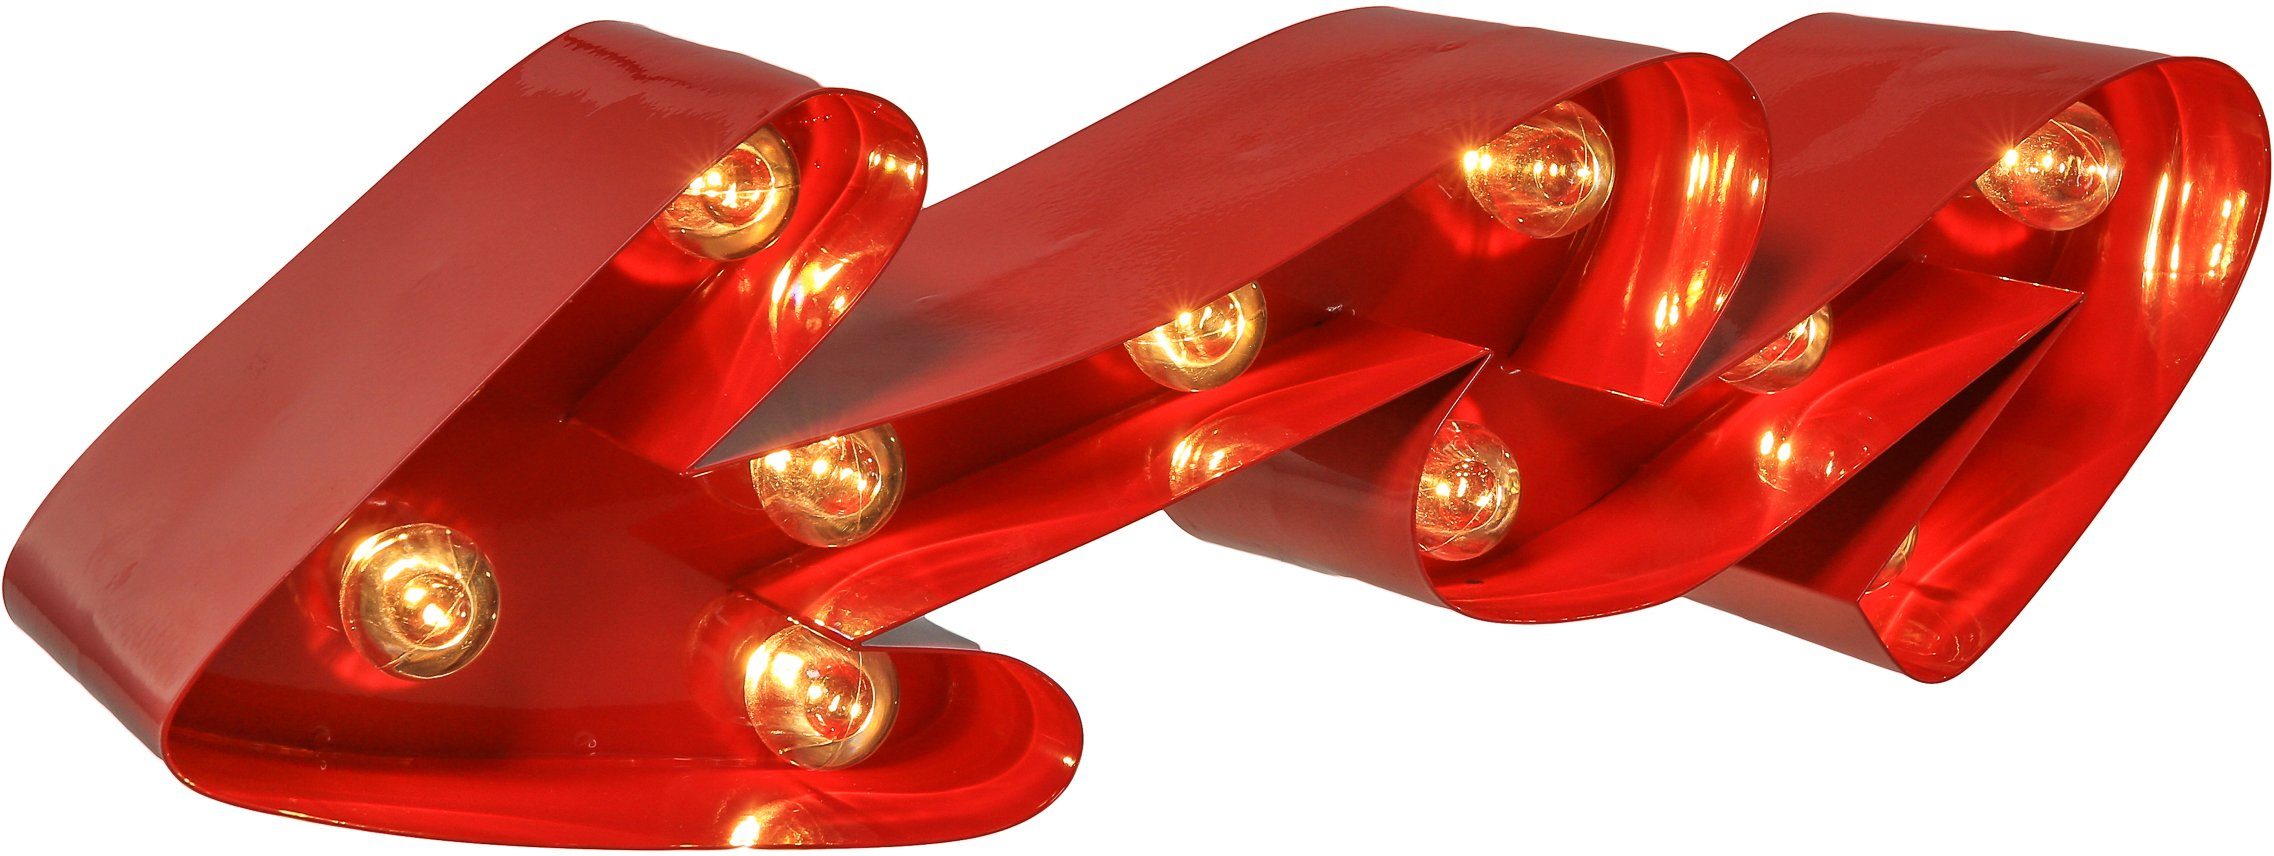 MARQUEE LIGHTS LED Dekolicht 10 Arrow, Curved integriert, - LEDs Wandlampe, Curved 38x12cm Warmweiß, festverbauten Tischlampe Arrow mit LED fest